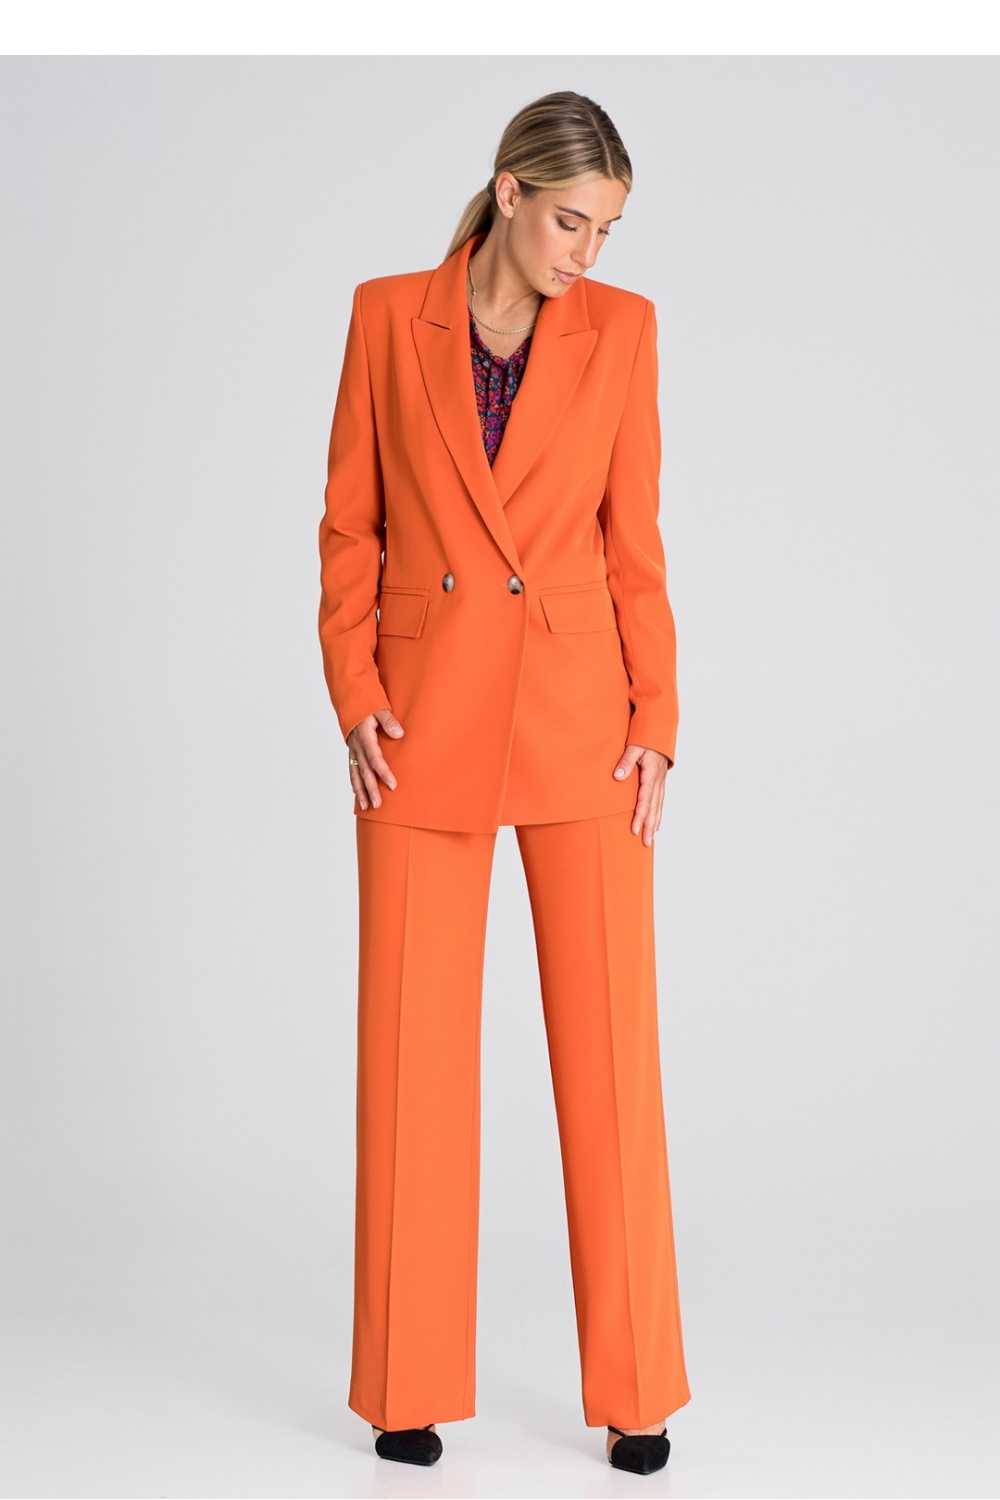  Jacket model 185078 Figl  orange